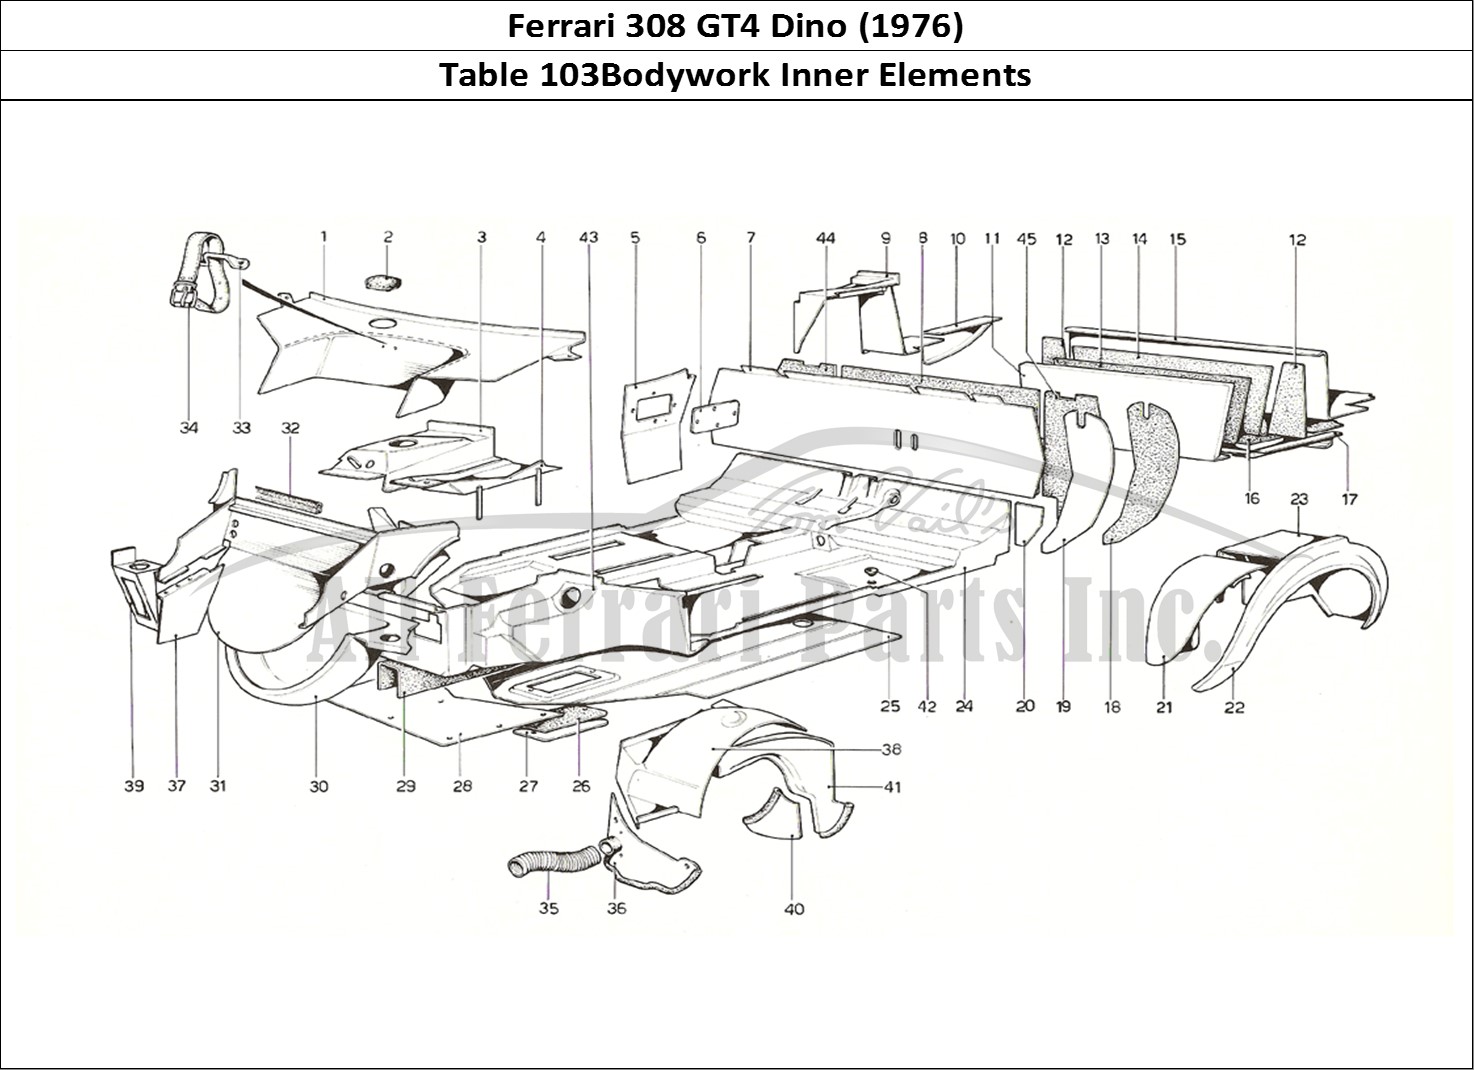 Ferrari Parts Ferrari 308 GT4 Dino (1976) Page 103 Body Shell - Inner elemen